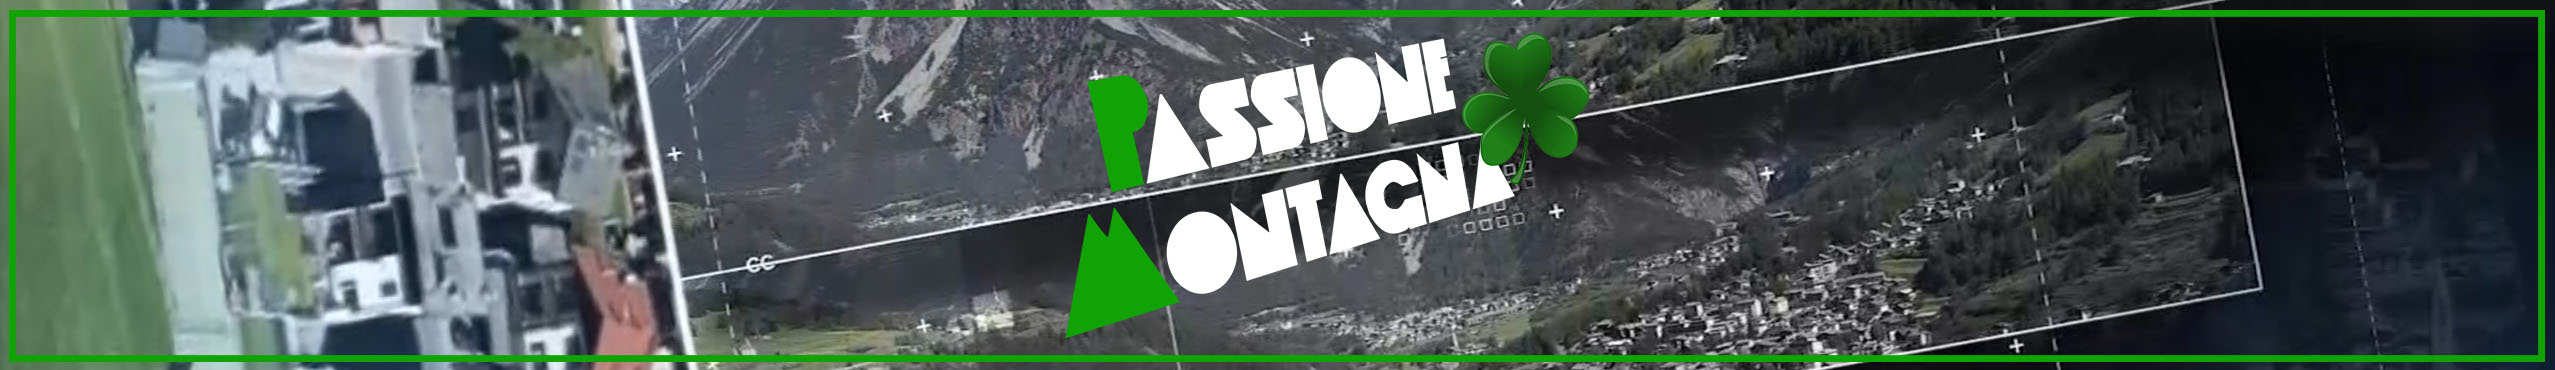 Banner passione montagna